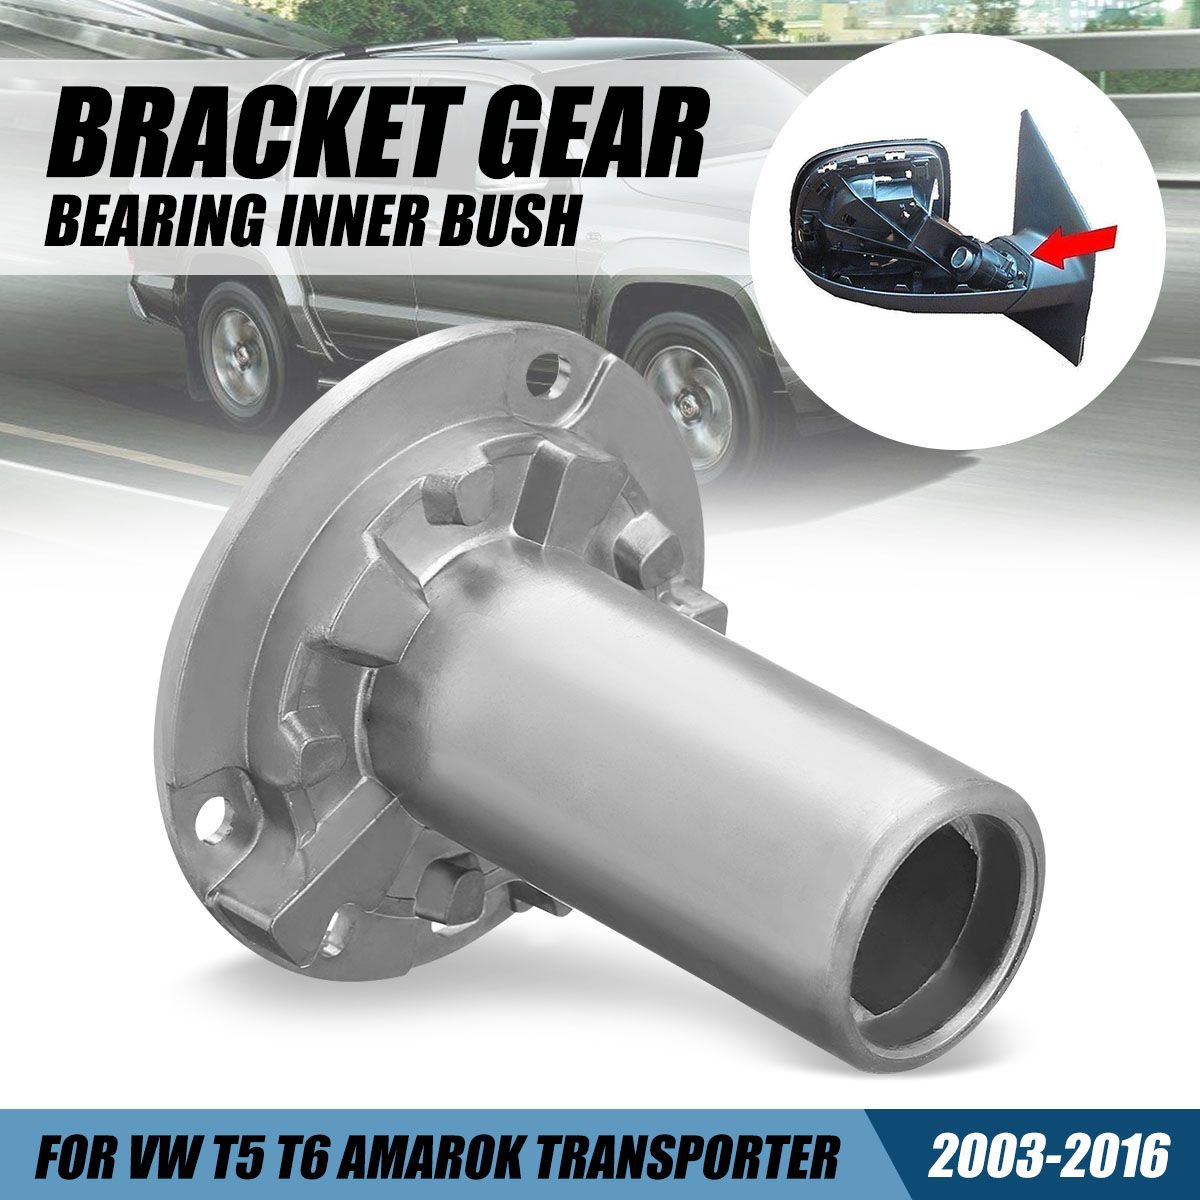 Car-Wing-Mirror-Bracket-Gear-Bearing-Inner-Bush-for-VW-T5-T6-Amarok-Transporter-2003-2016-1580984